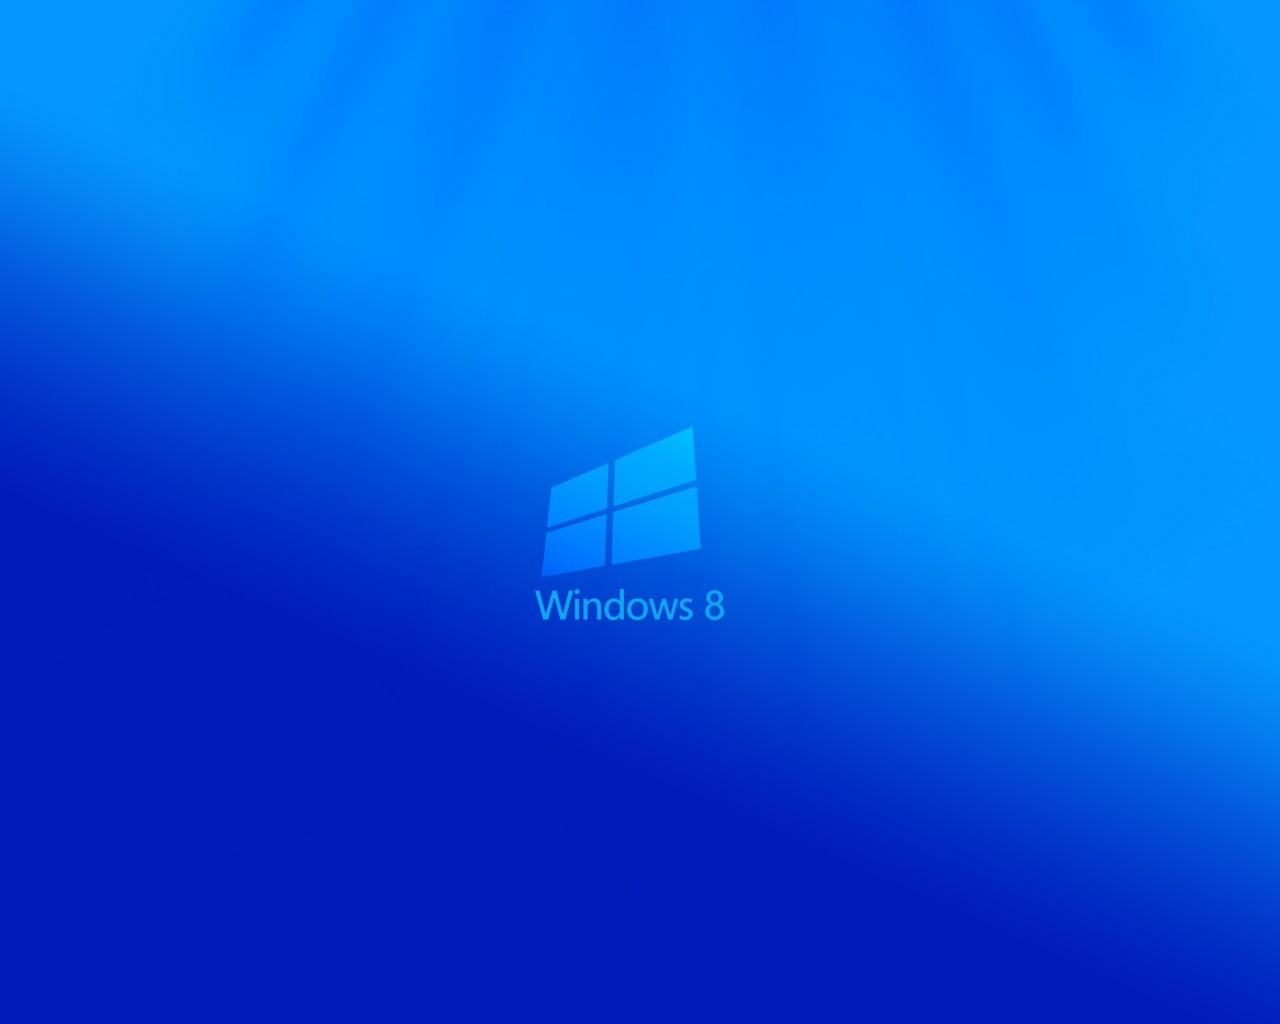 Windows 8 Light for 1280 x 1024 resolution